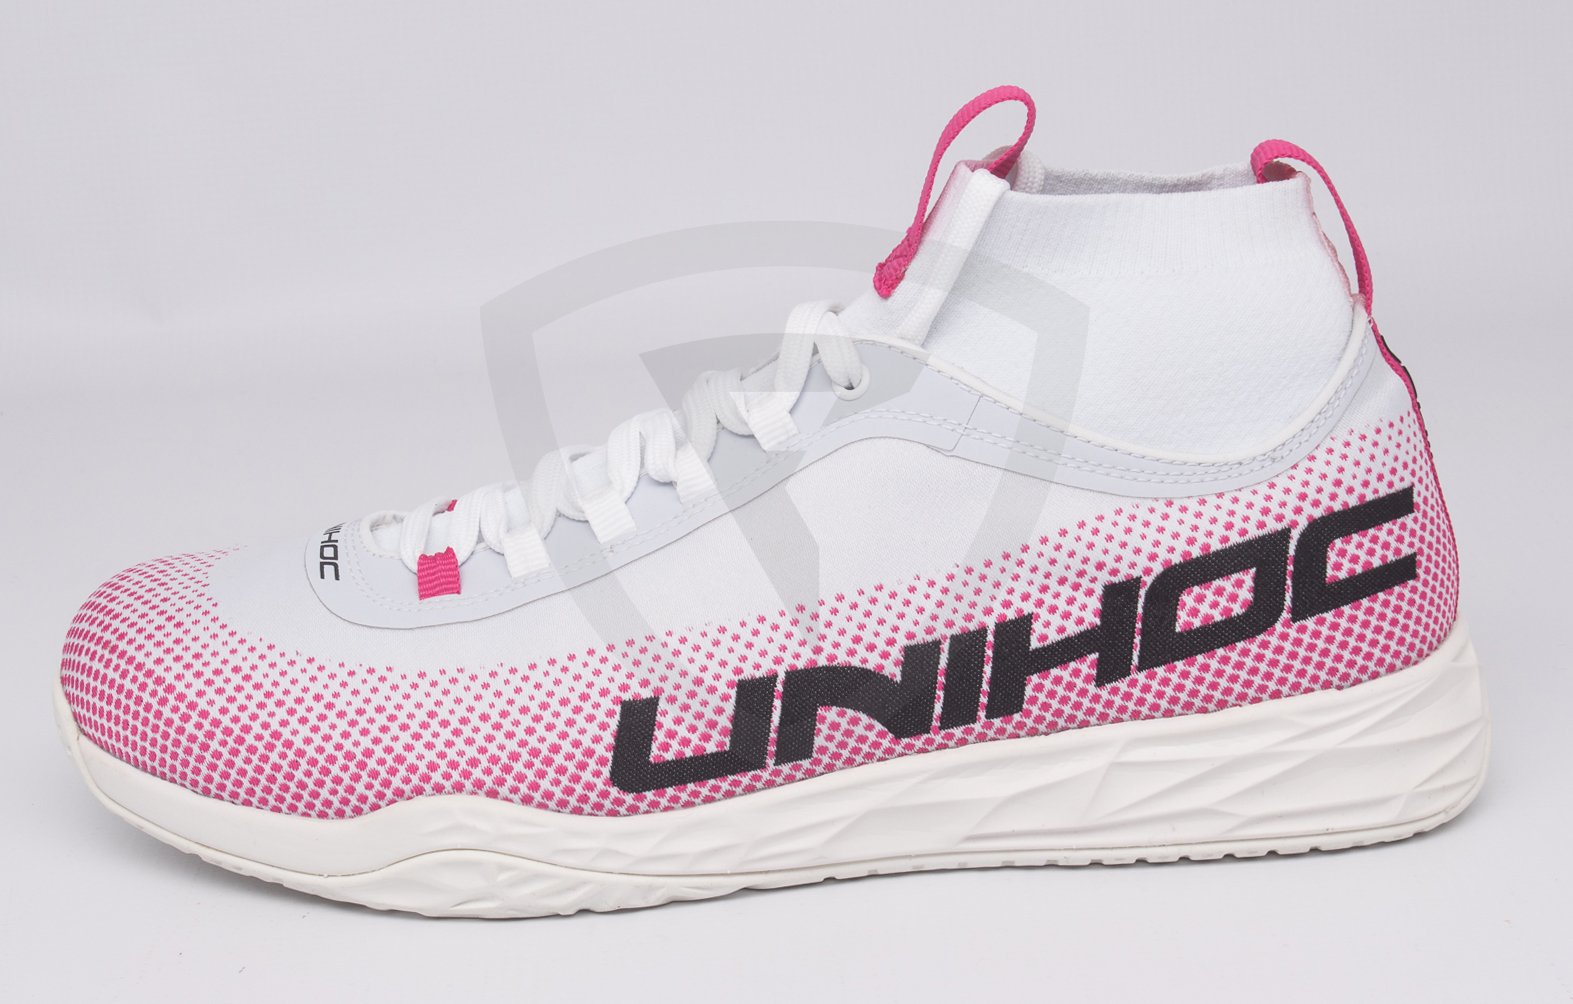 Unihoc U5 Midcut Lady White-Pink 19/20 UK 8 / US 9 / EUR 42 / CM 27,6